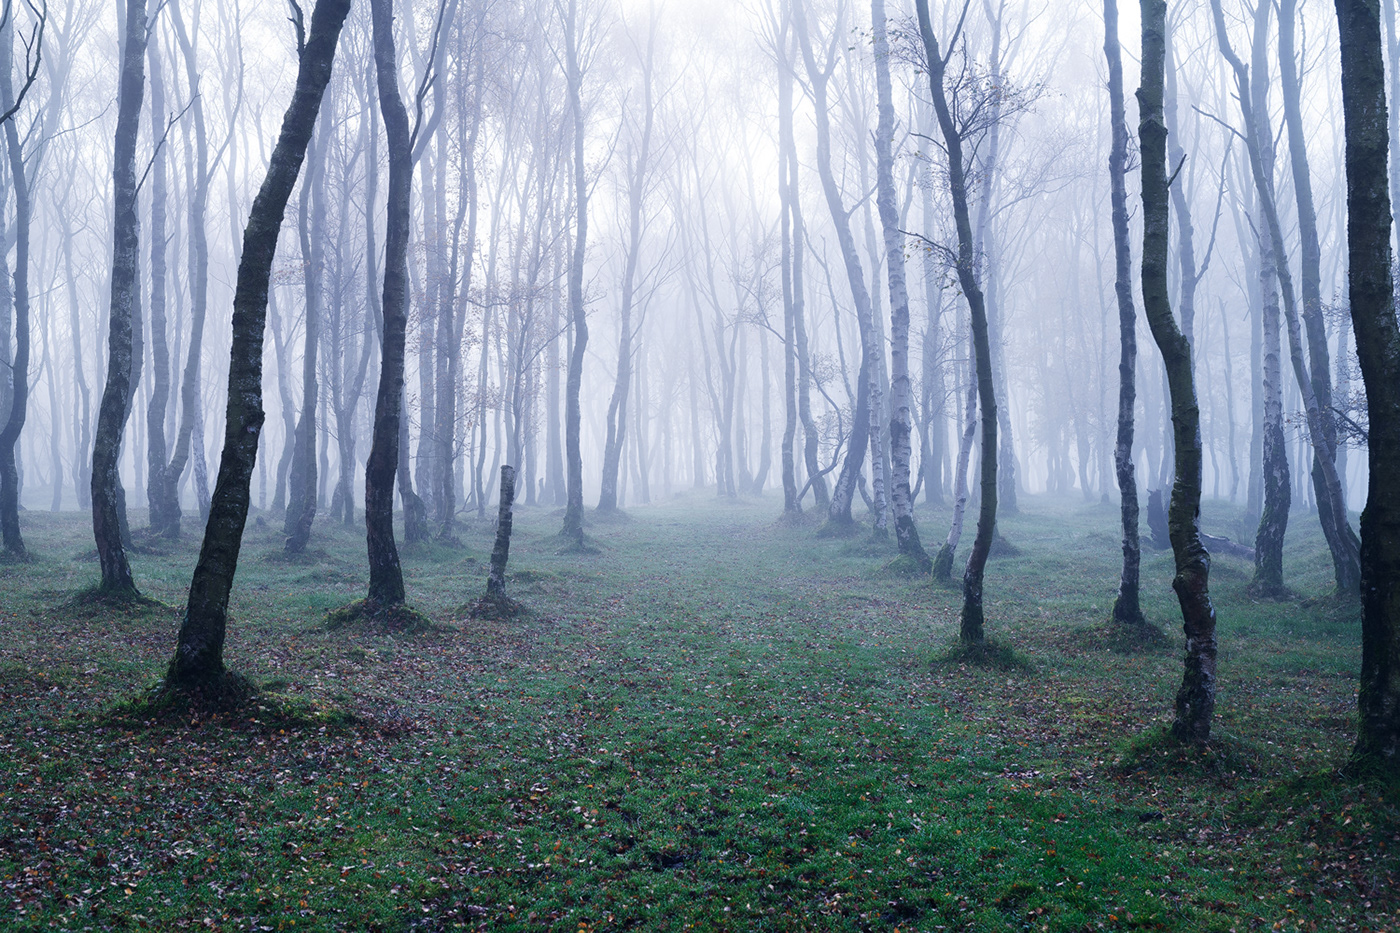 autumn birch Dreaming fairytale fog Grove mist path träume Treescape